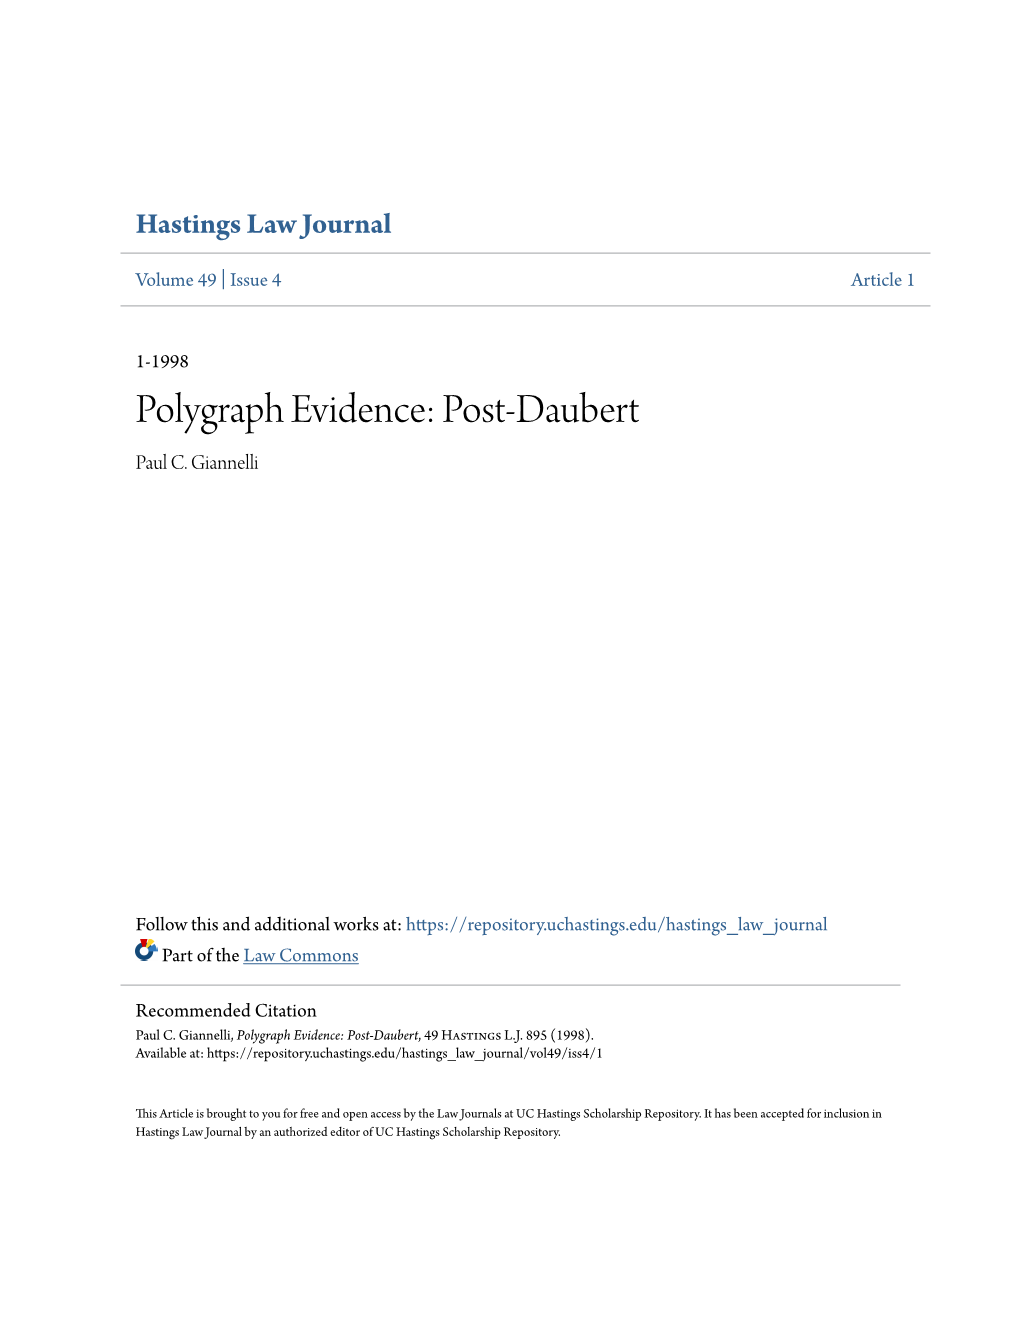 Polygraph Evidence: Post-Daubert Paul C